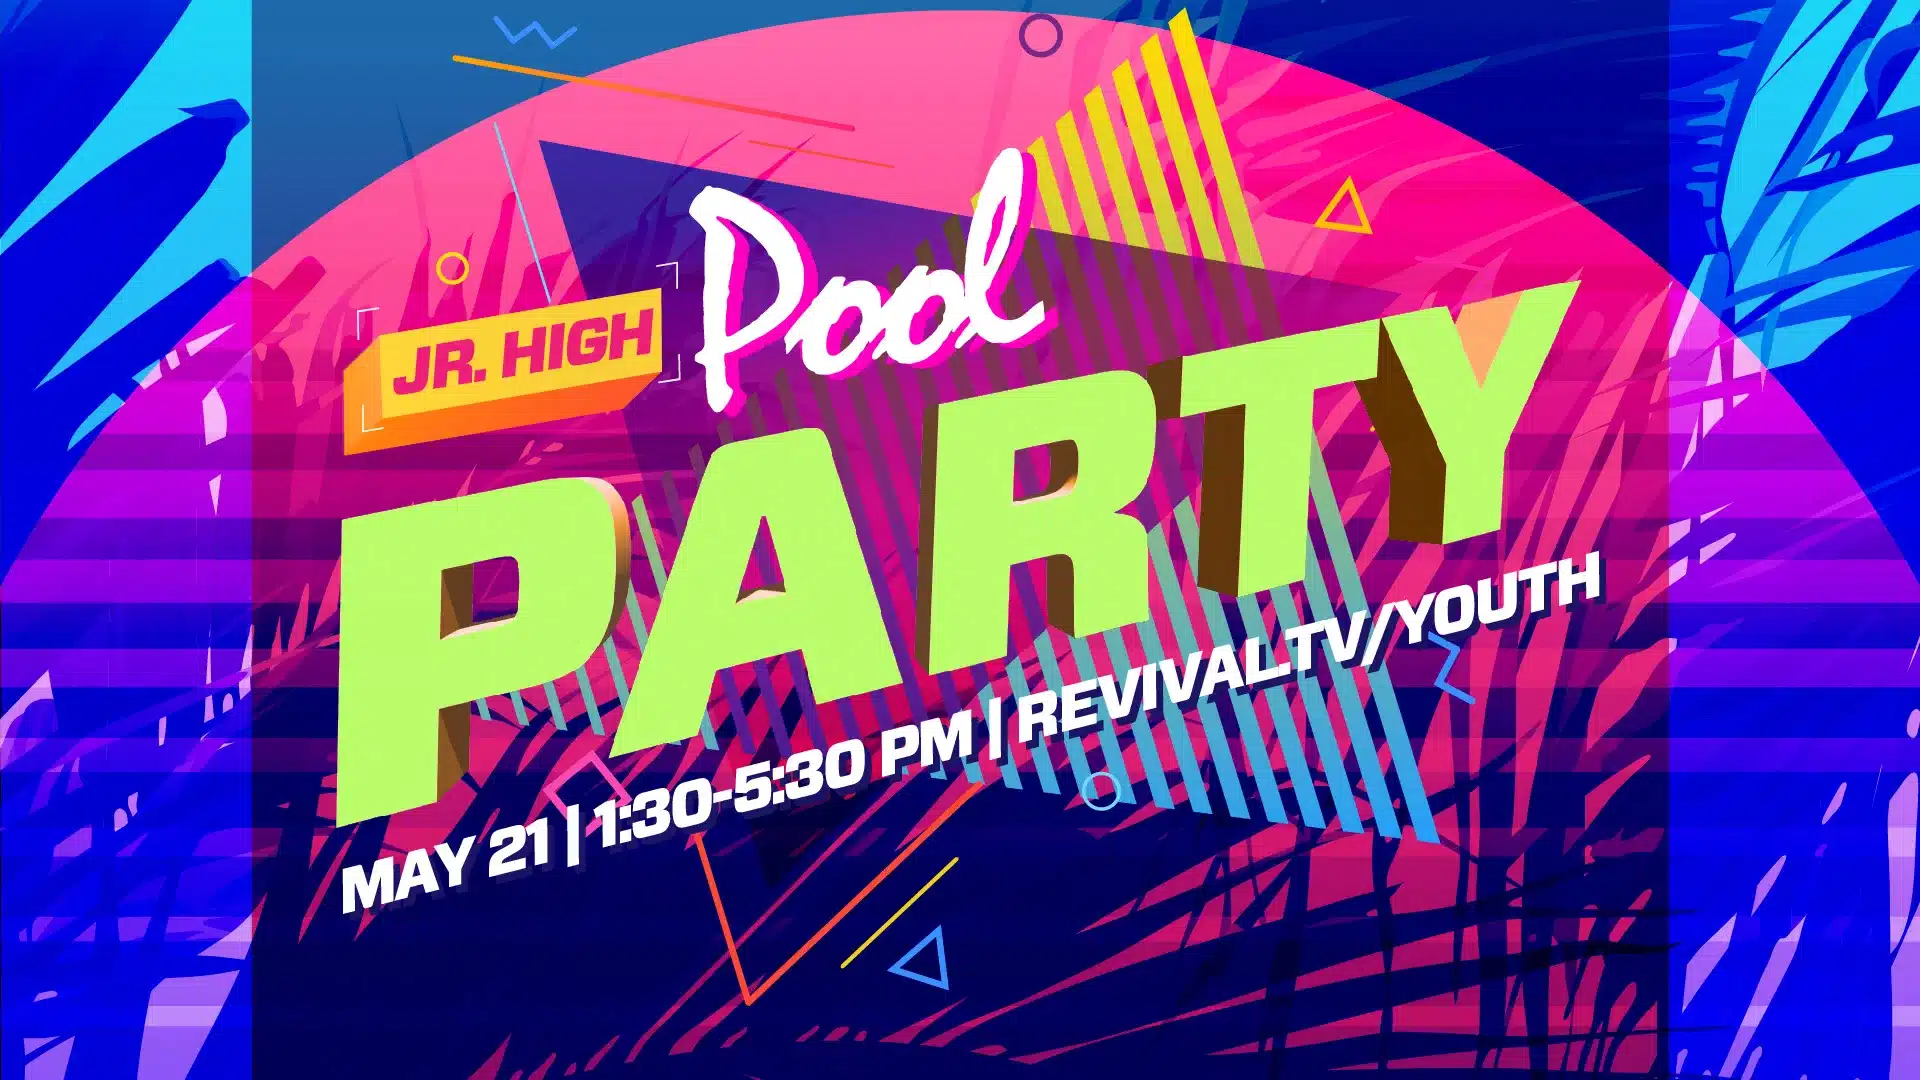 Jr. High Pool Party